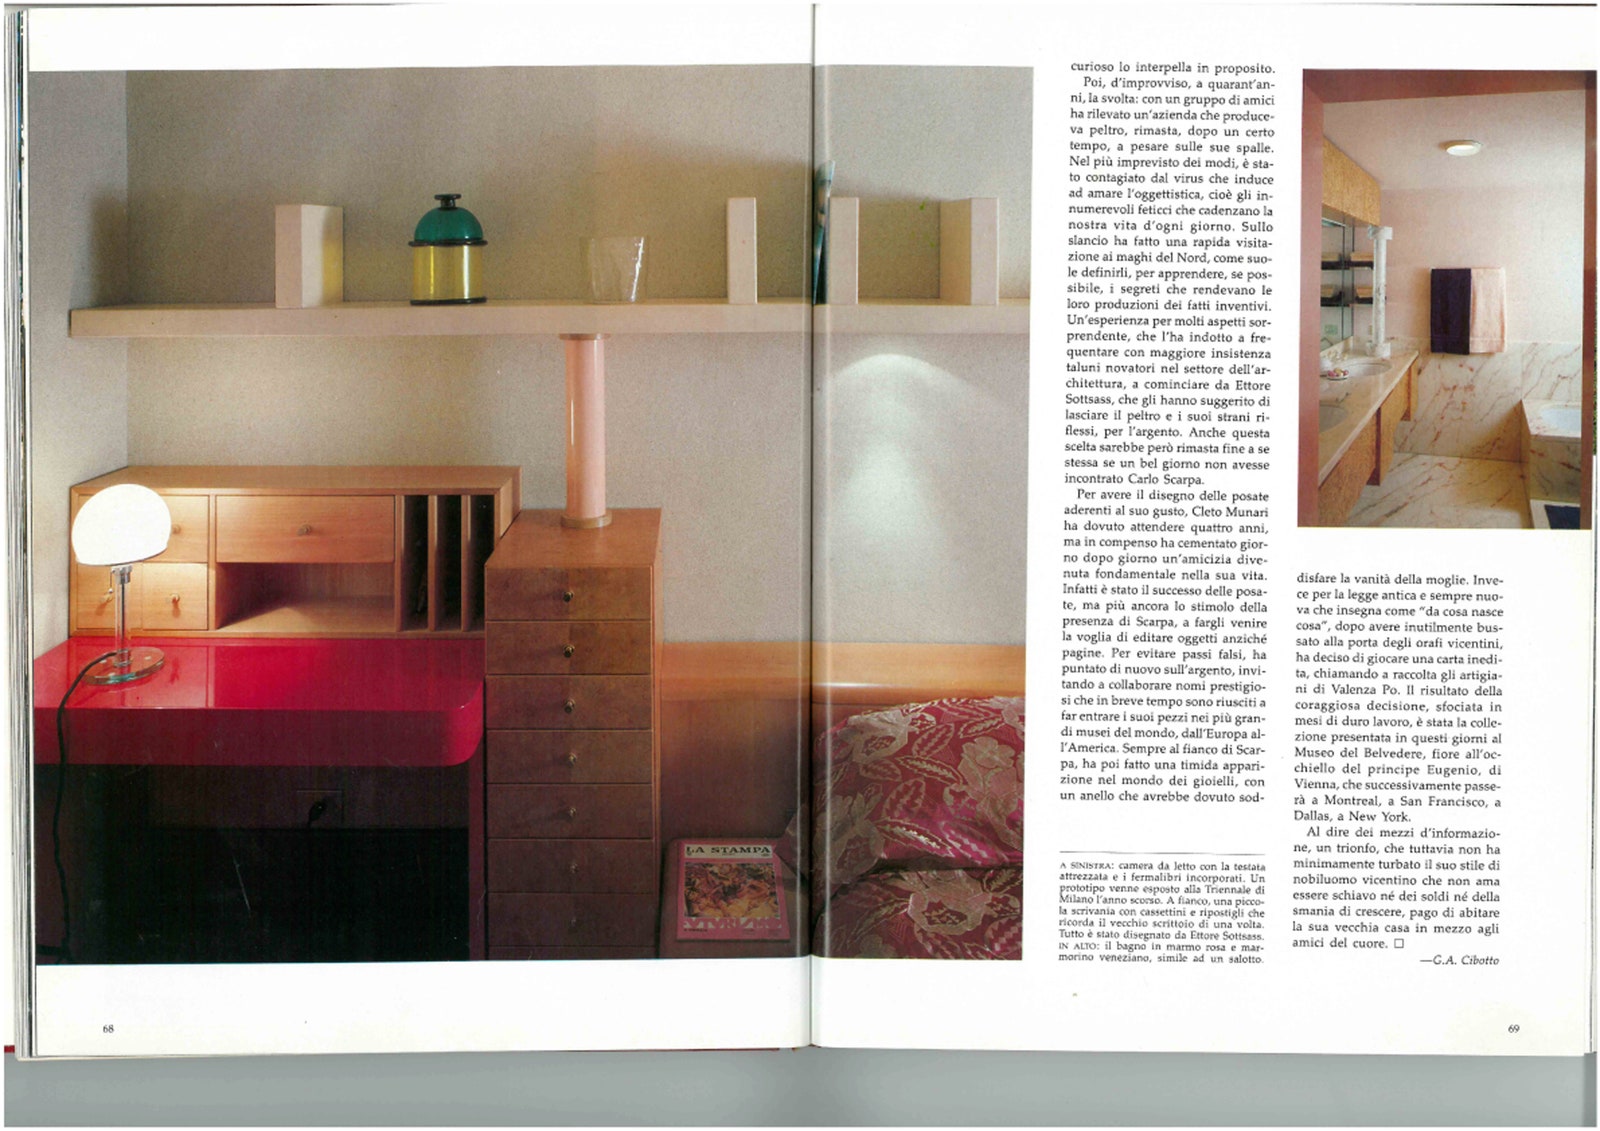 Квартира Клето Мунари по дизайну Этторе Соттсасса публикации из журнала AD Italia 1987.